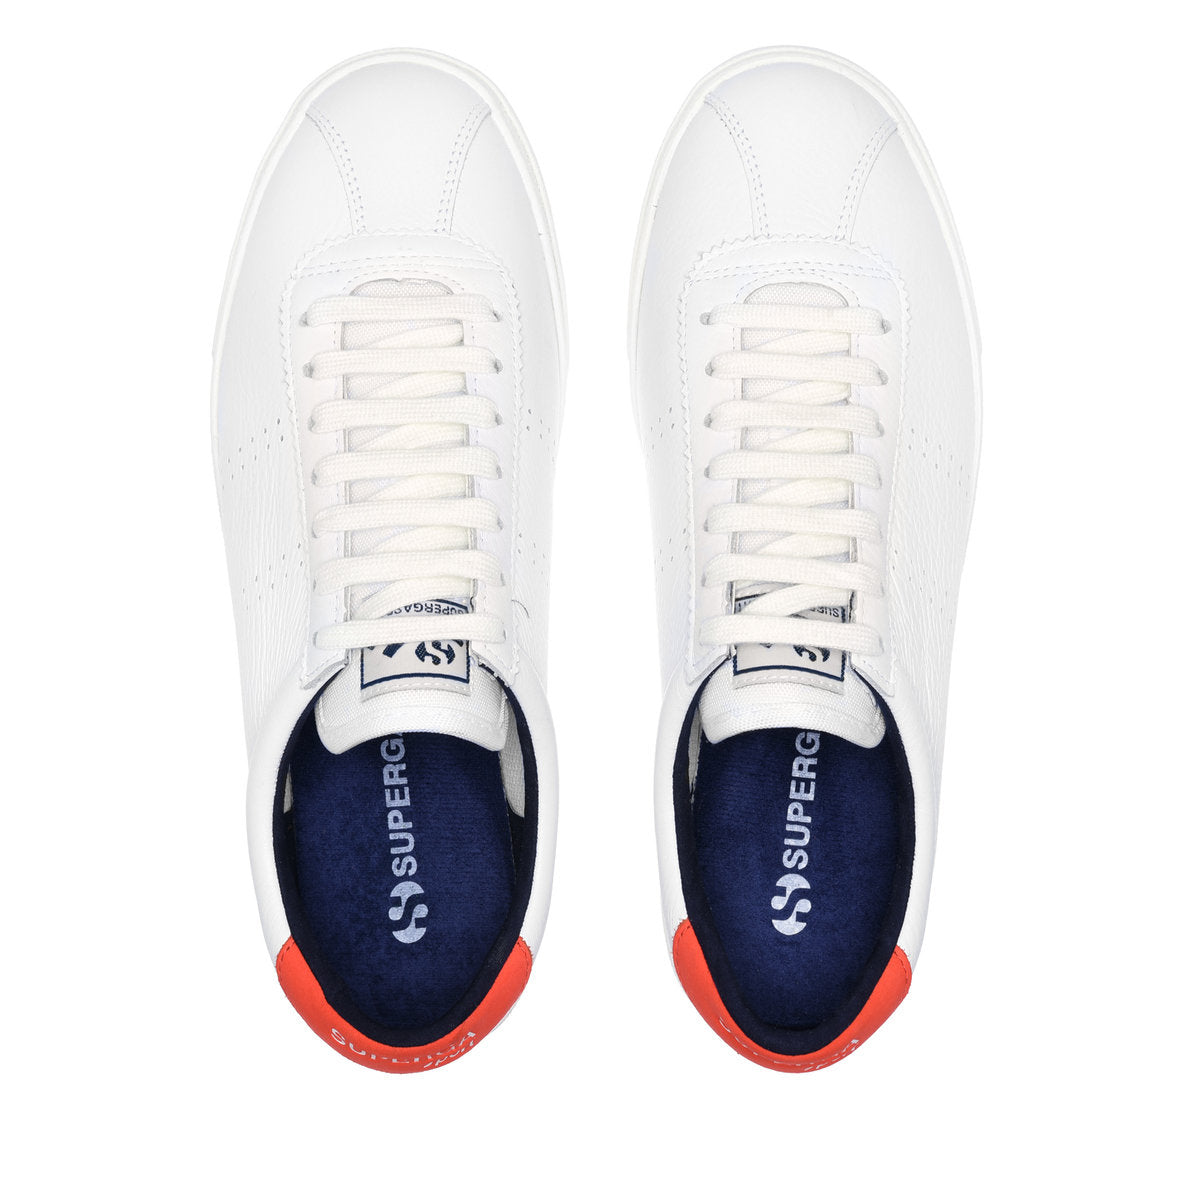 Superga Men's 2843 Club S Leather Comfort Sneakers Orange Tomato - Blue Navy